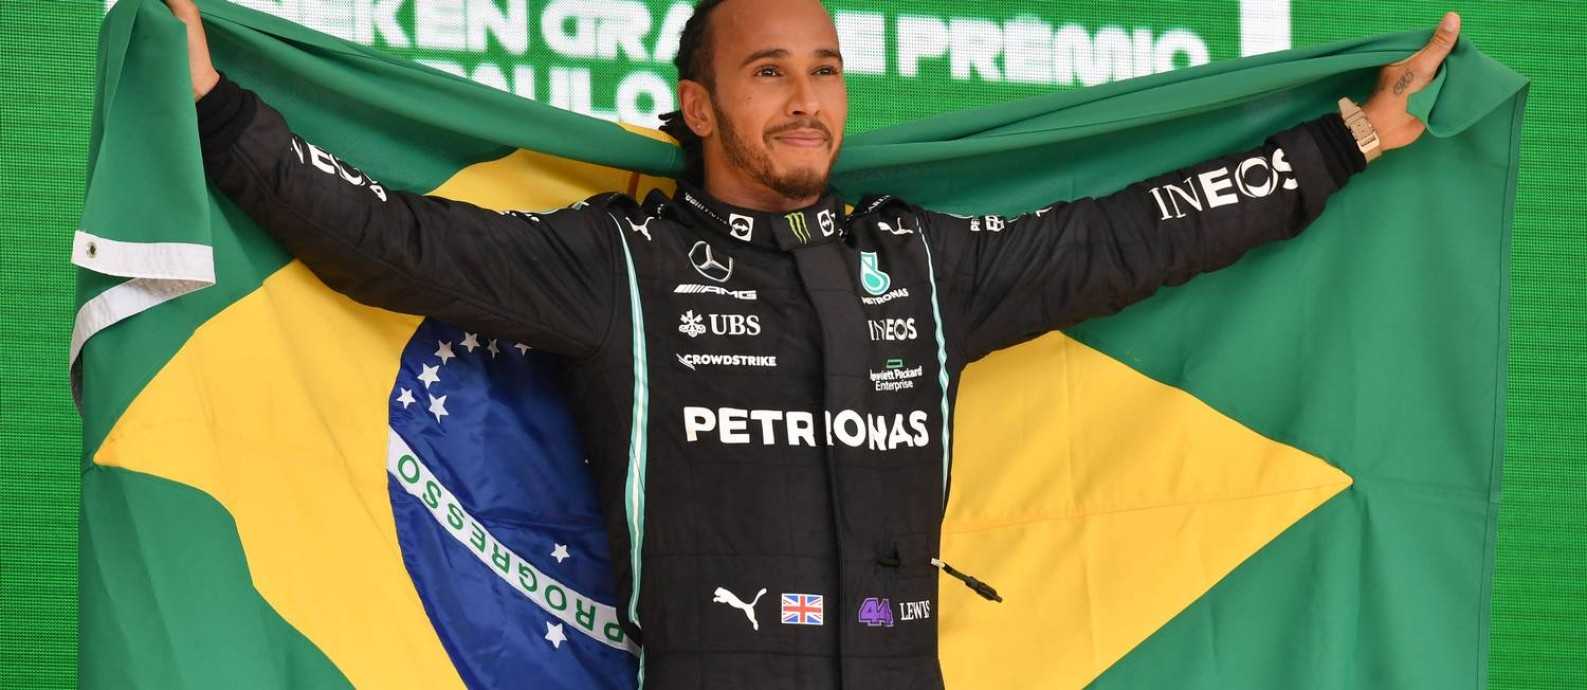 xLewis-Hamilton-comemora-vitoria-com-bandeira-do-Brasil-em-Interlagos.jpg.pagespeed.ic_.OQEJzC73c6.jpg